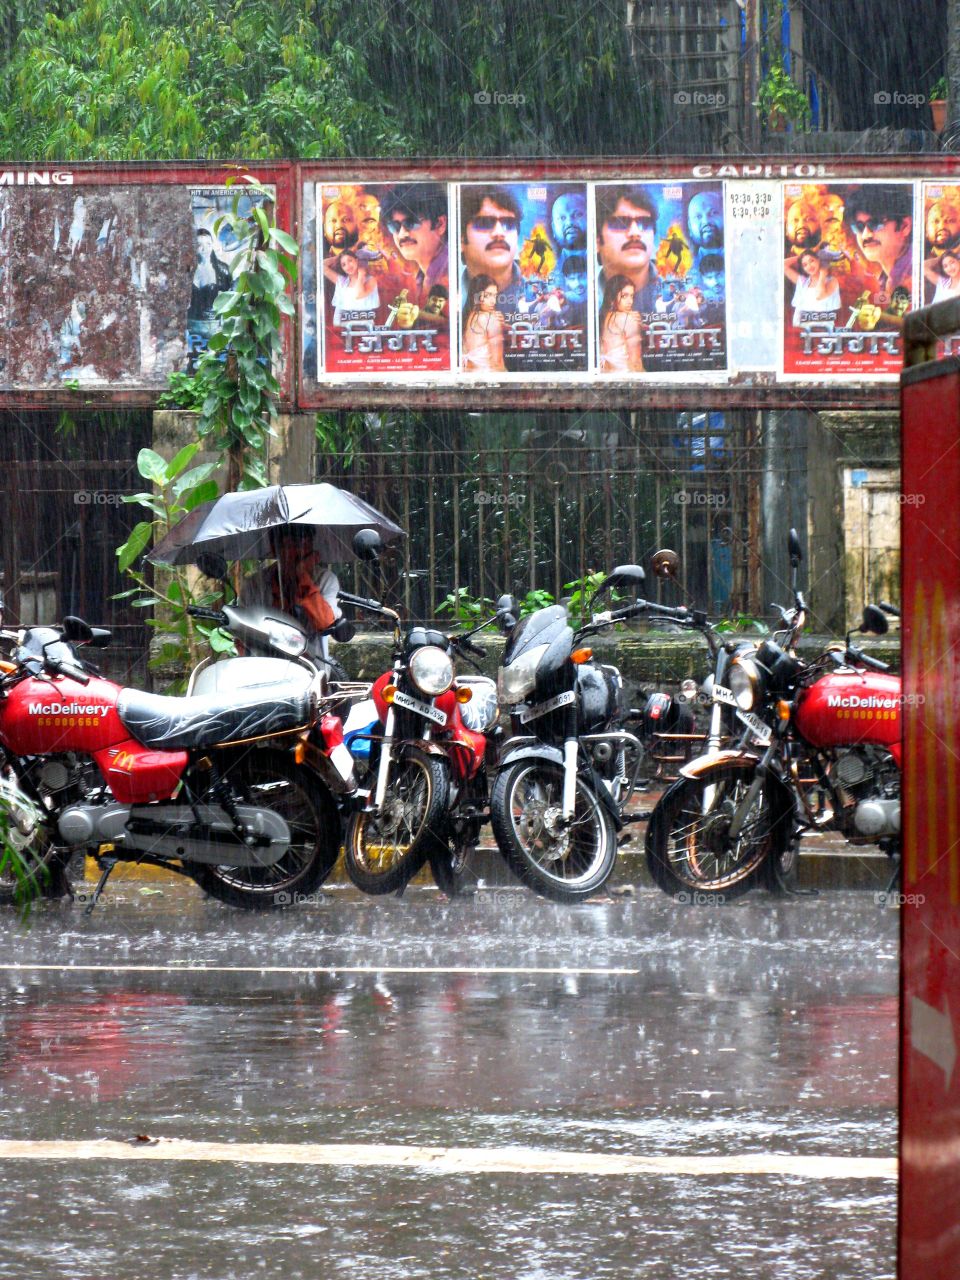 McDonald's Delivery Motorbikes in Mumbai during the monsoon season, India, Asia